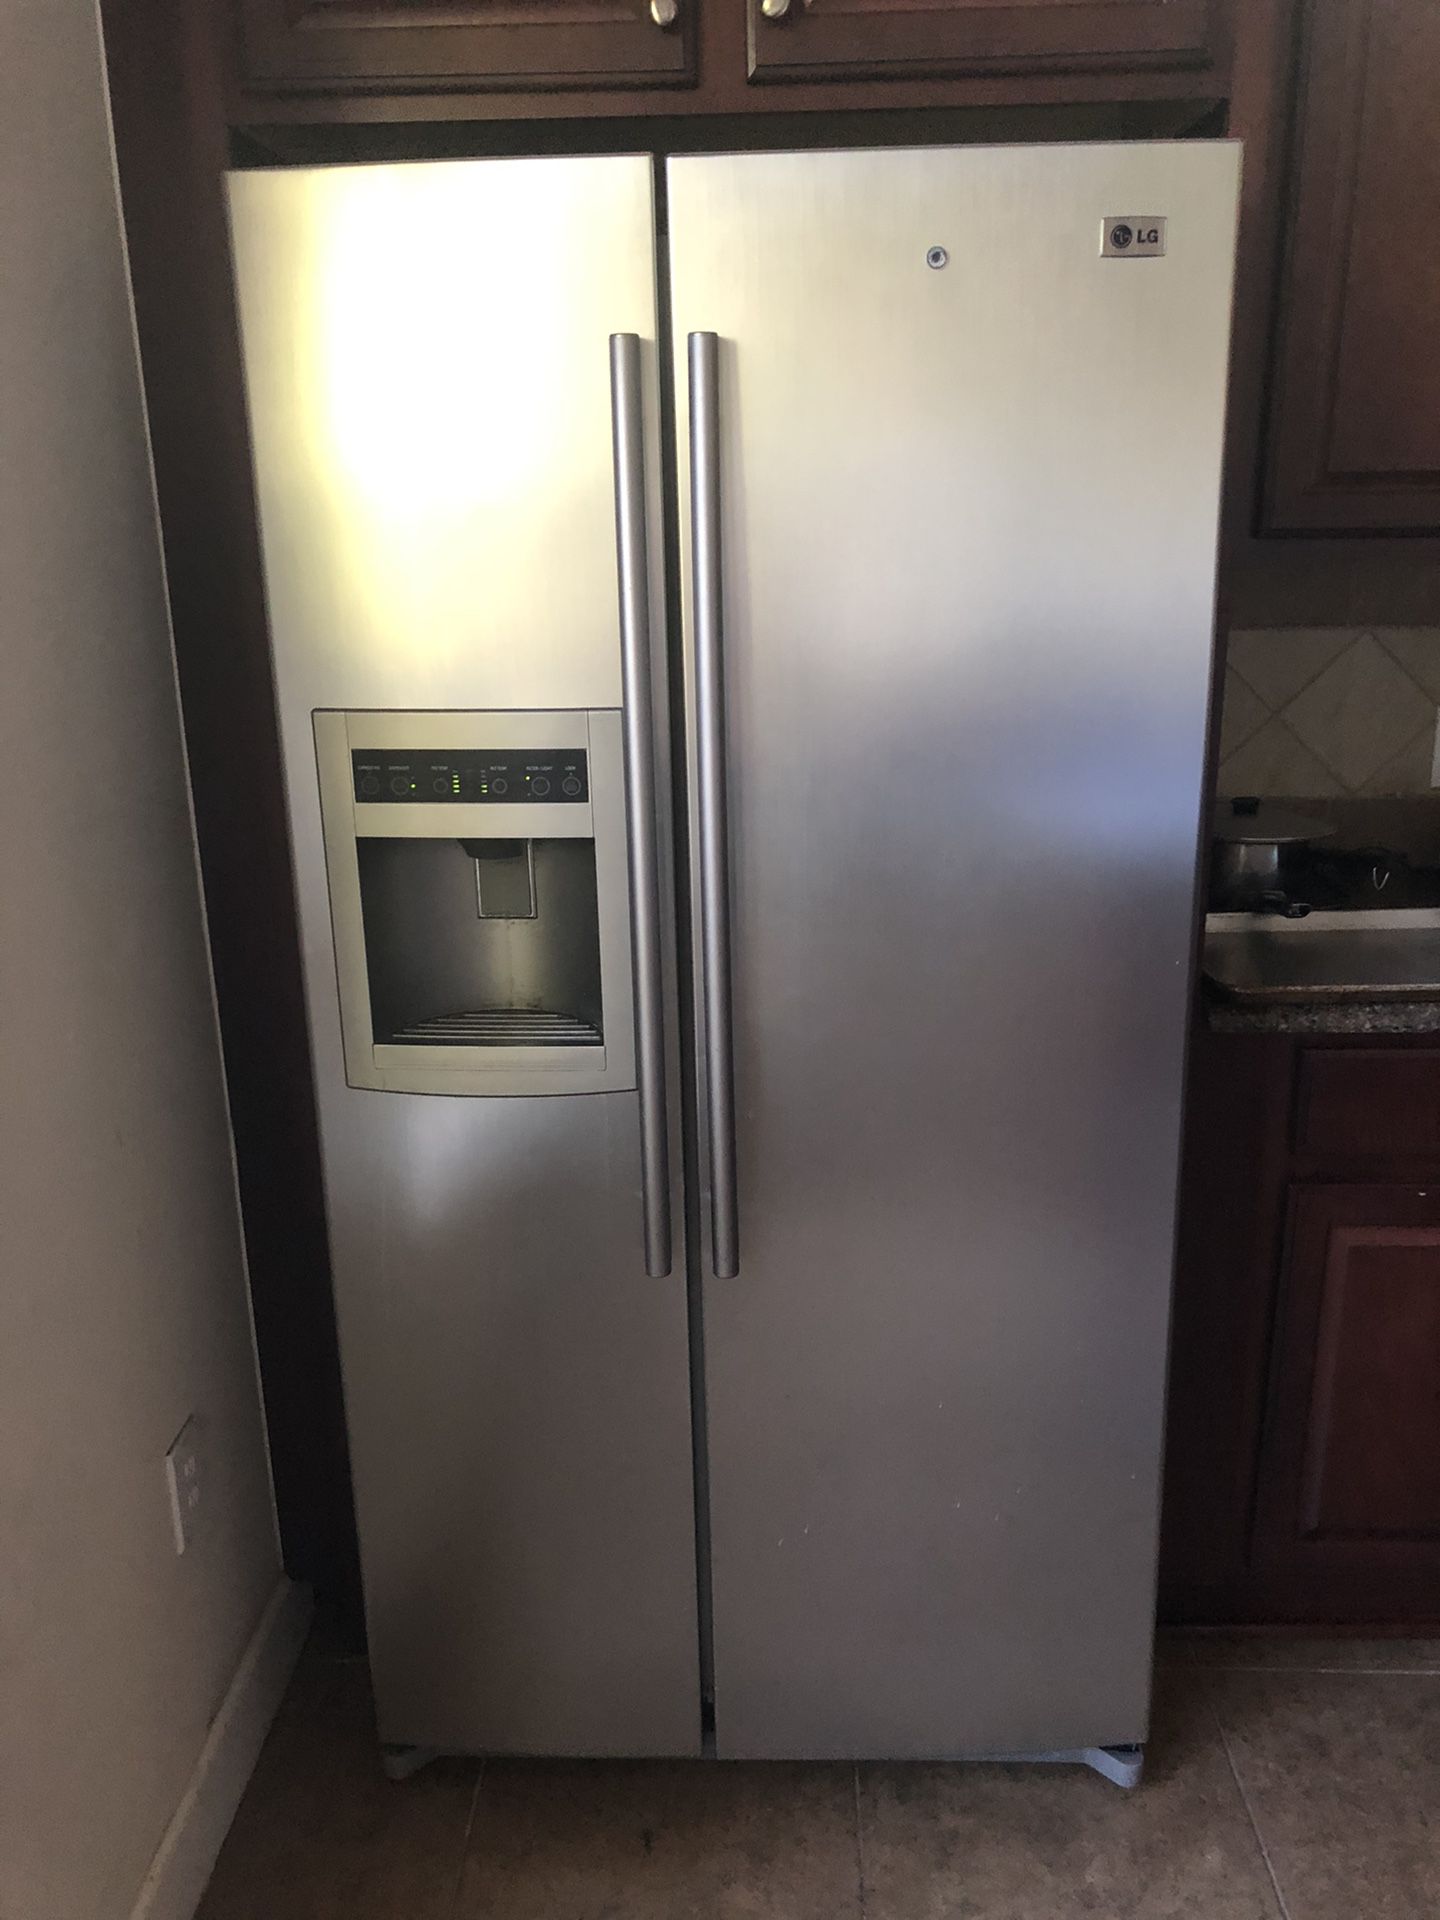 LG Stainless steel refrigerator